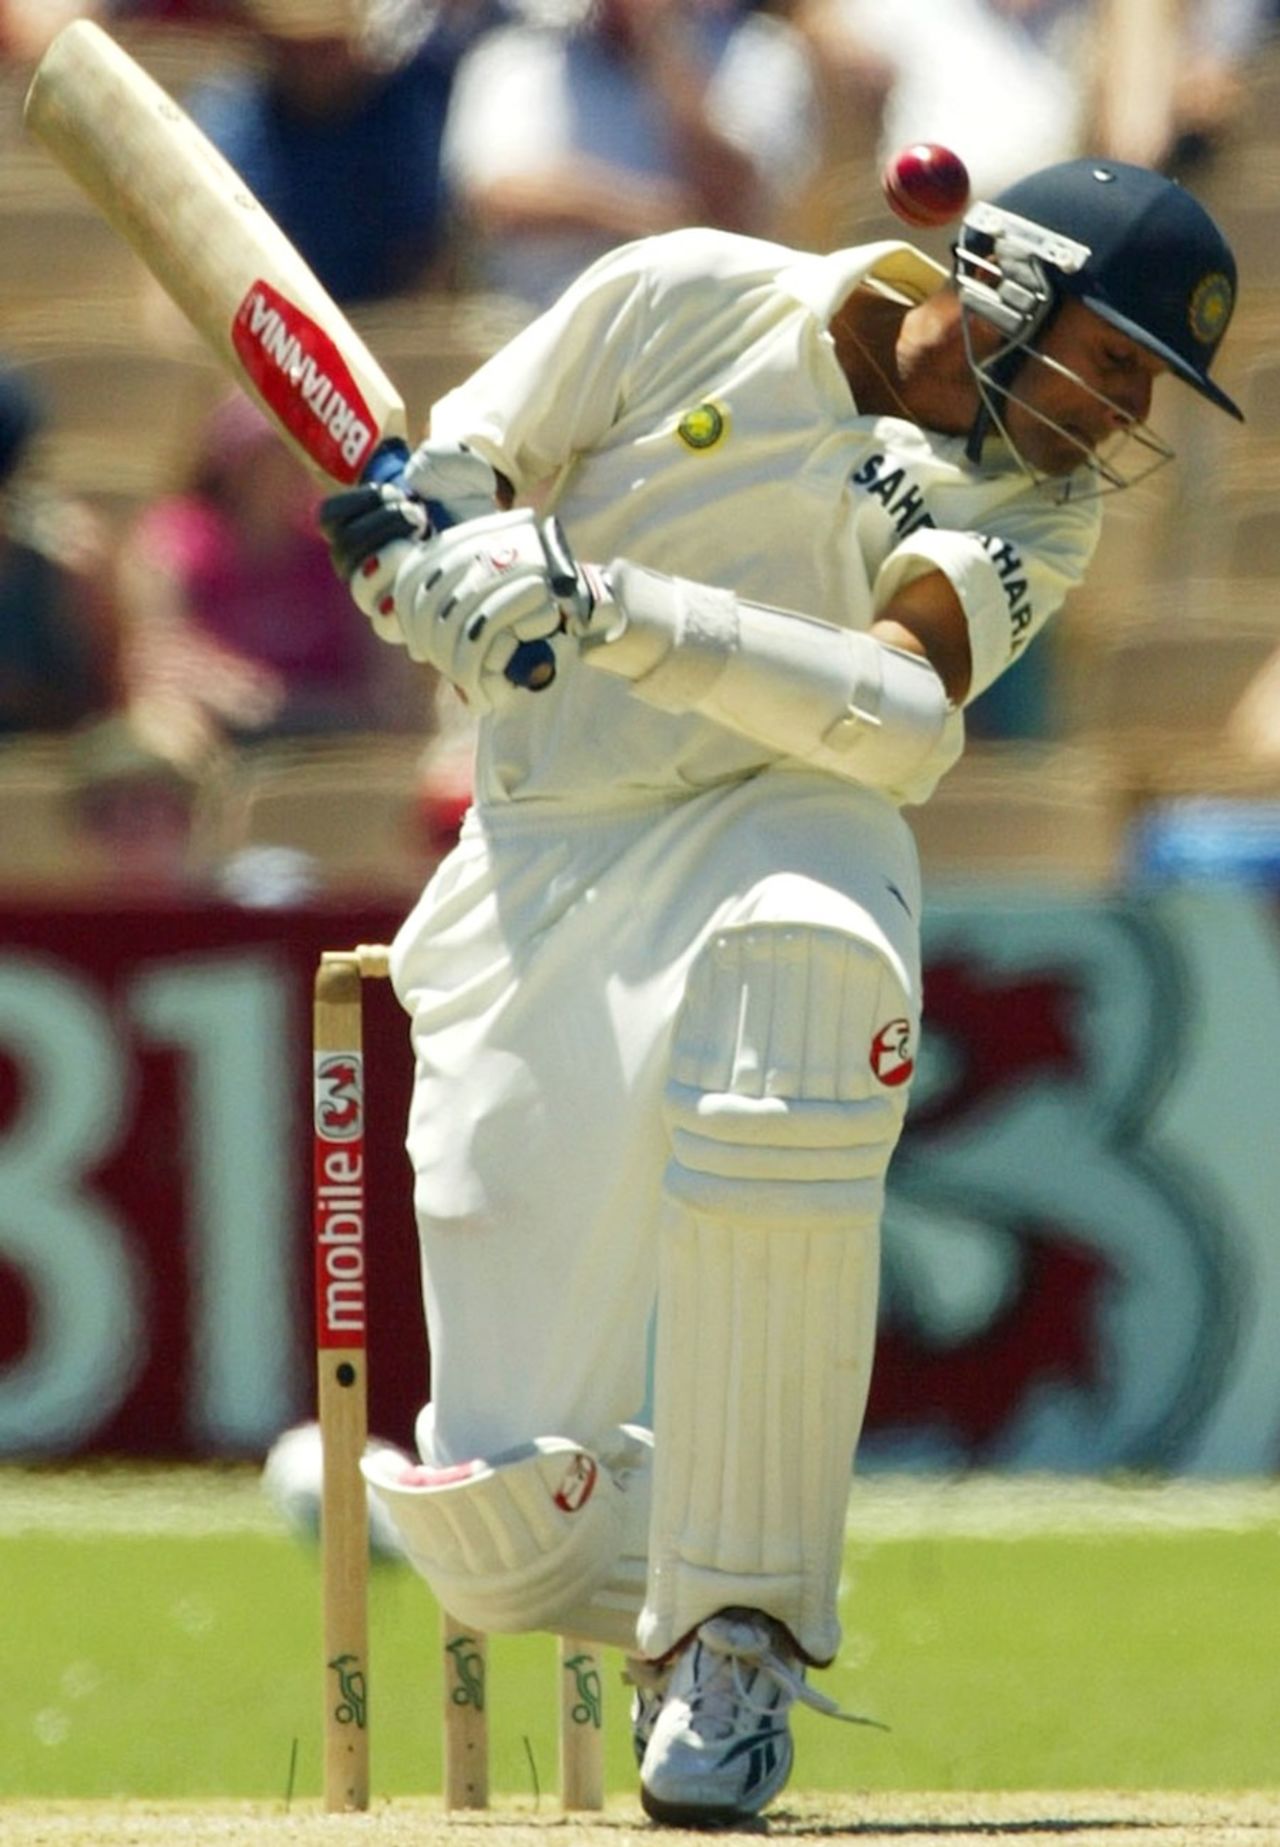 Dravid evades a short ball, Australia v India, 2nd Test, Adelaide, 3rd day, December 14, 2003